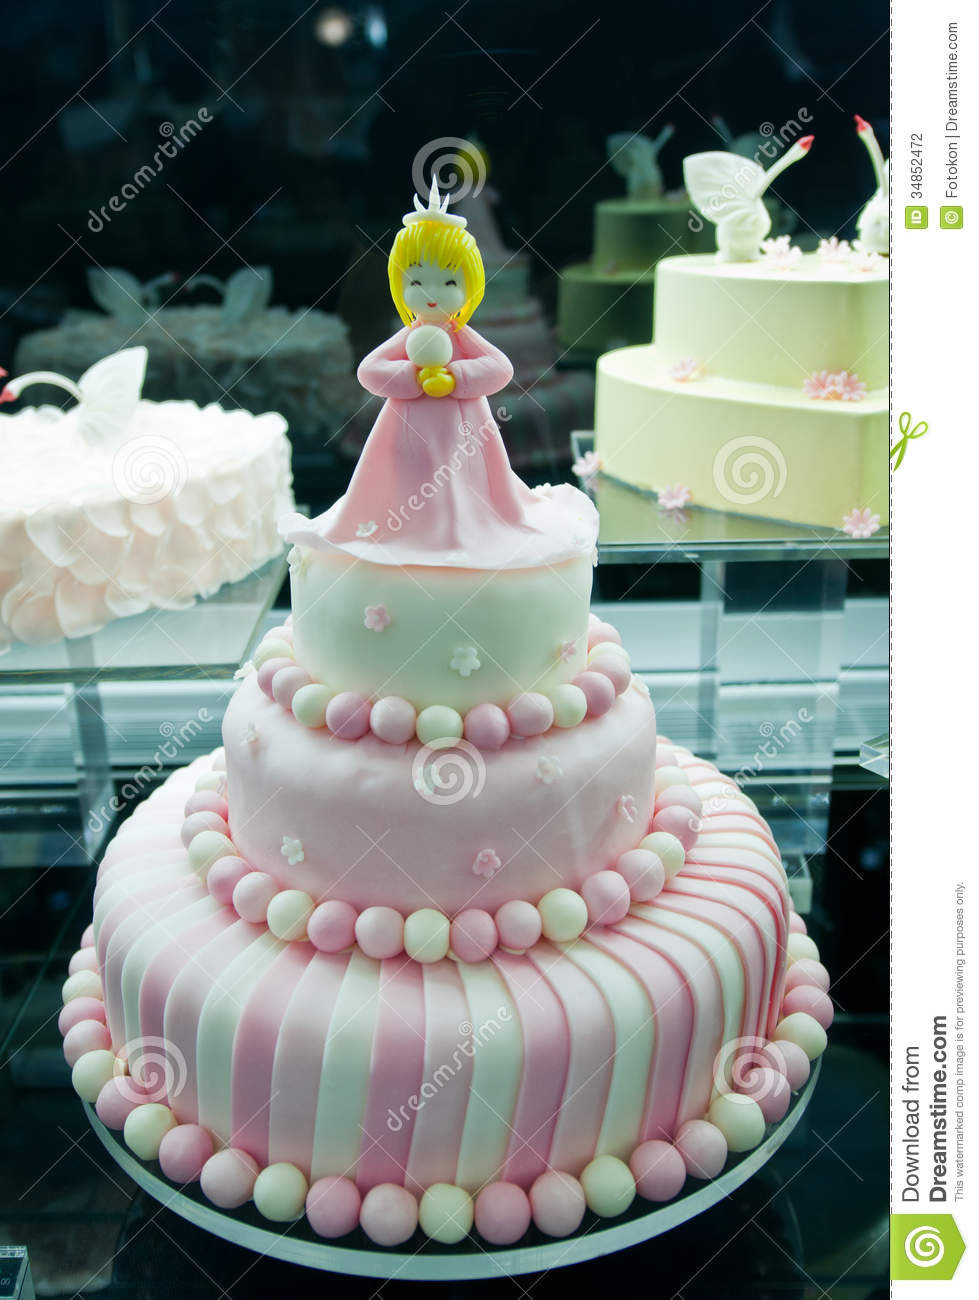 Best ideas about Nice Birthday Cake
. Save or Pin Sweet cake stock photo Image of republic pekin peking Now.